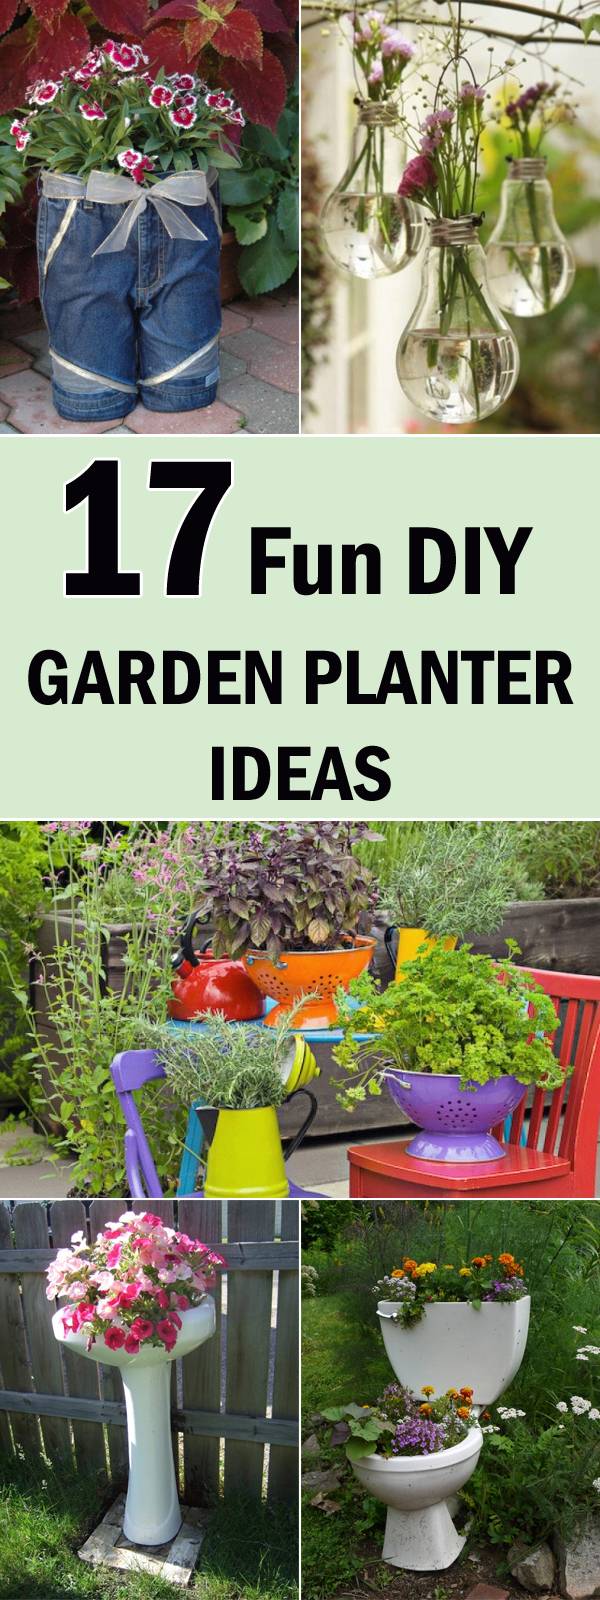 Fun Gardening Gift Ideas